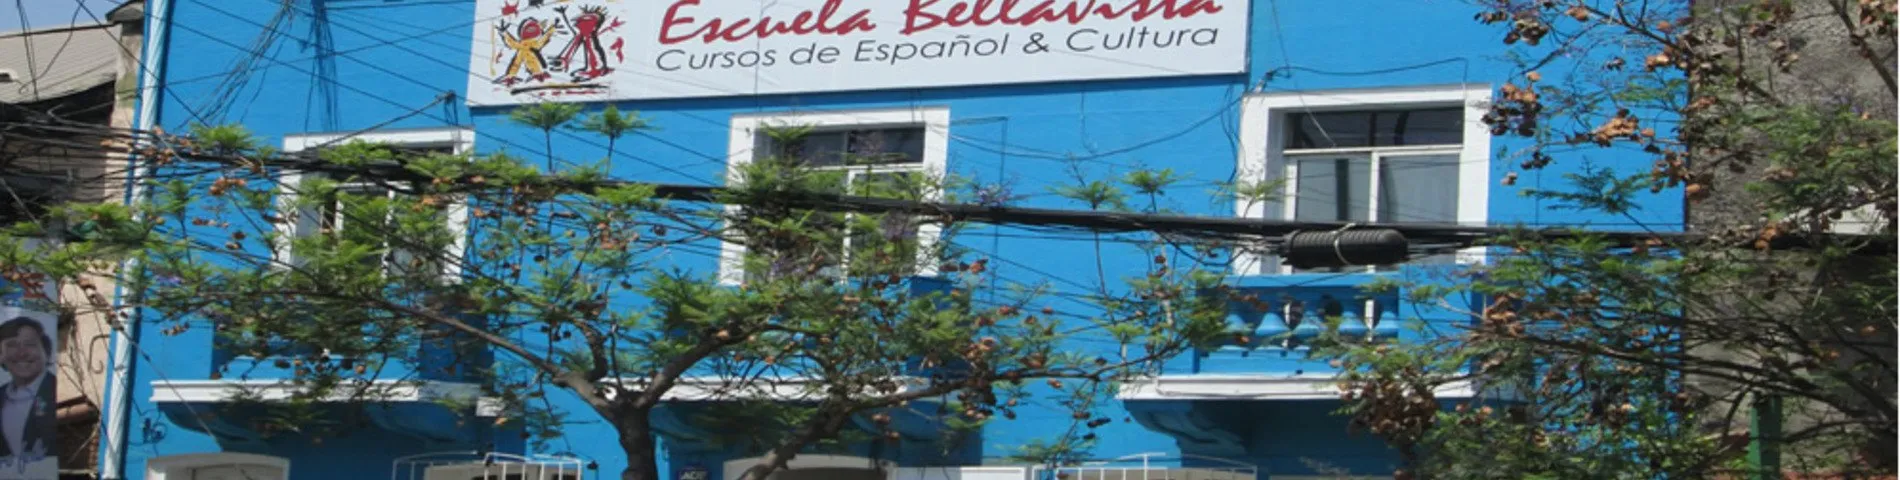 Escuela Bellavista immagine 1